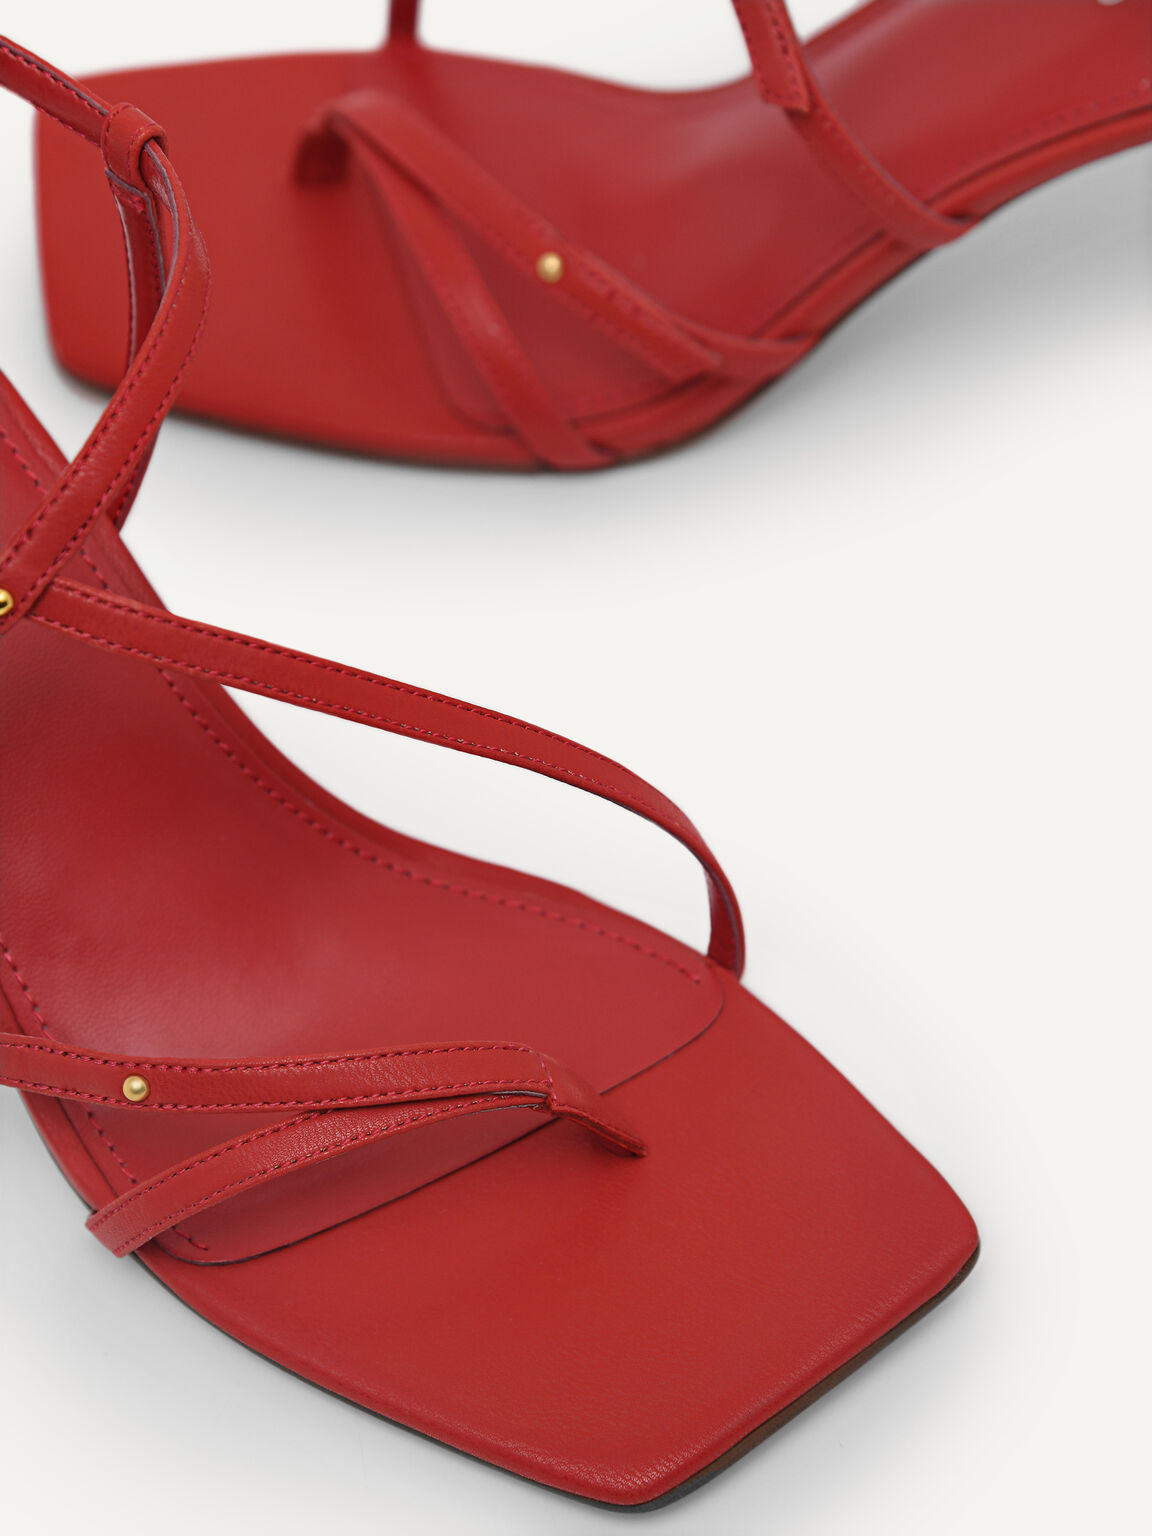 Strappy Heel Sandals, Red